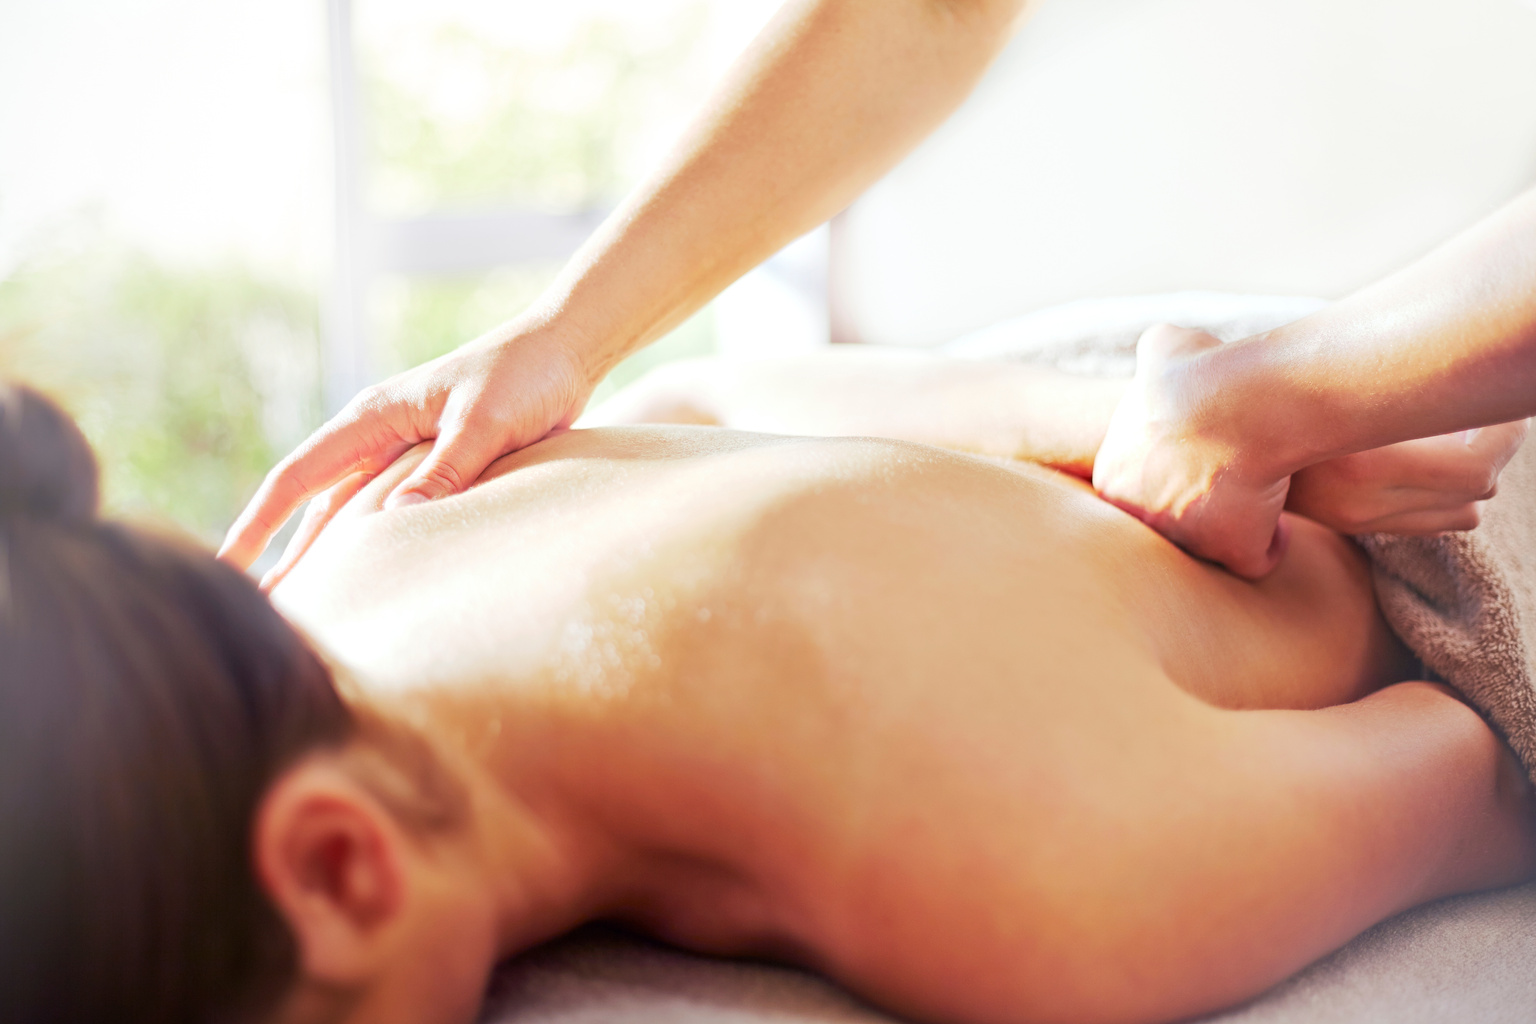 Masseuse massaging womans back